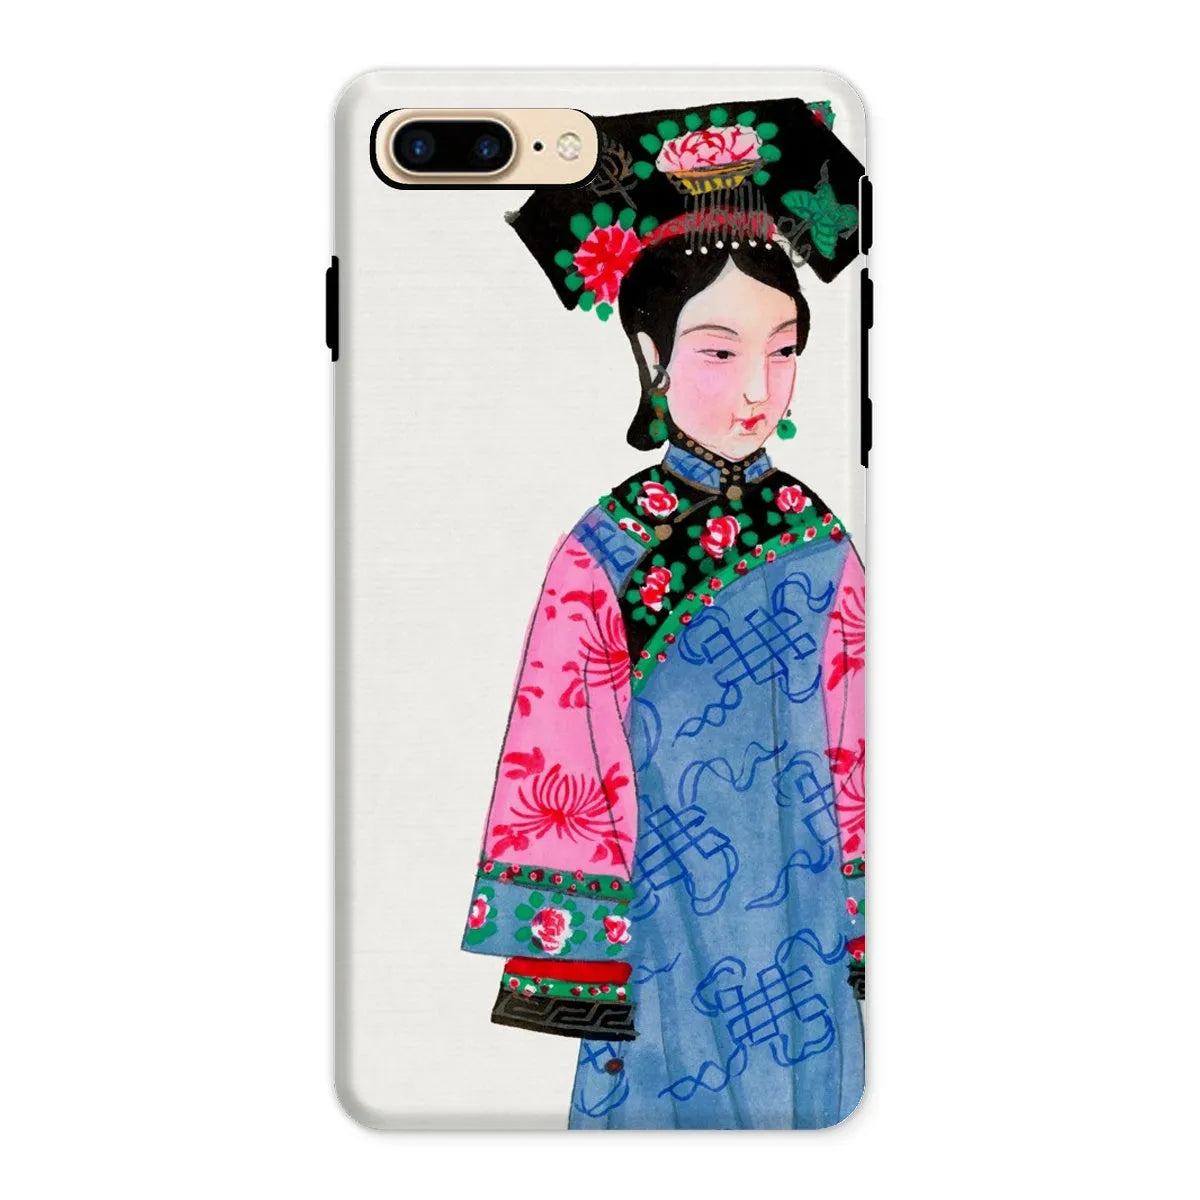 Noblewoman Too - Manchu Aesthetic Art Phone Case - Iphone 8 Plus / Matte - Mobile Phone Cases - Aesthetic Art